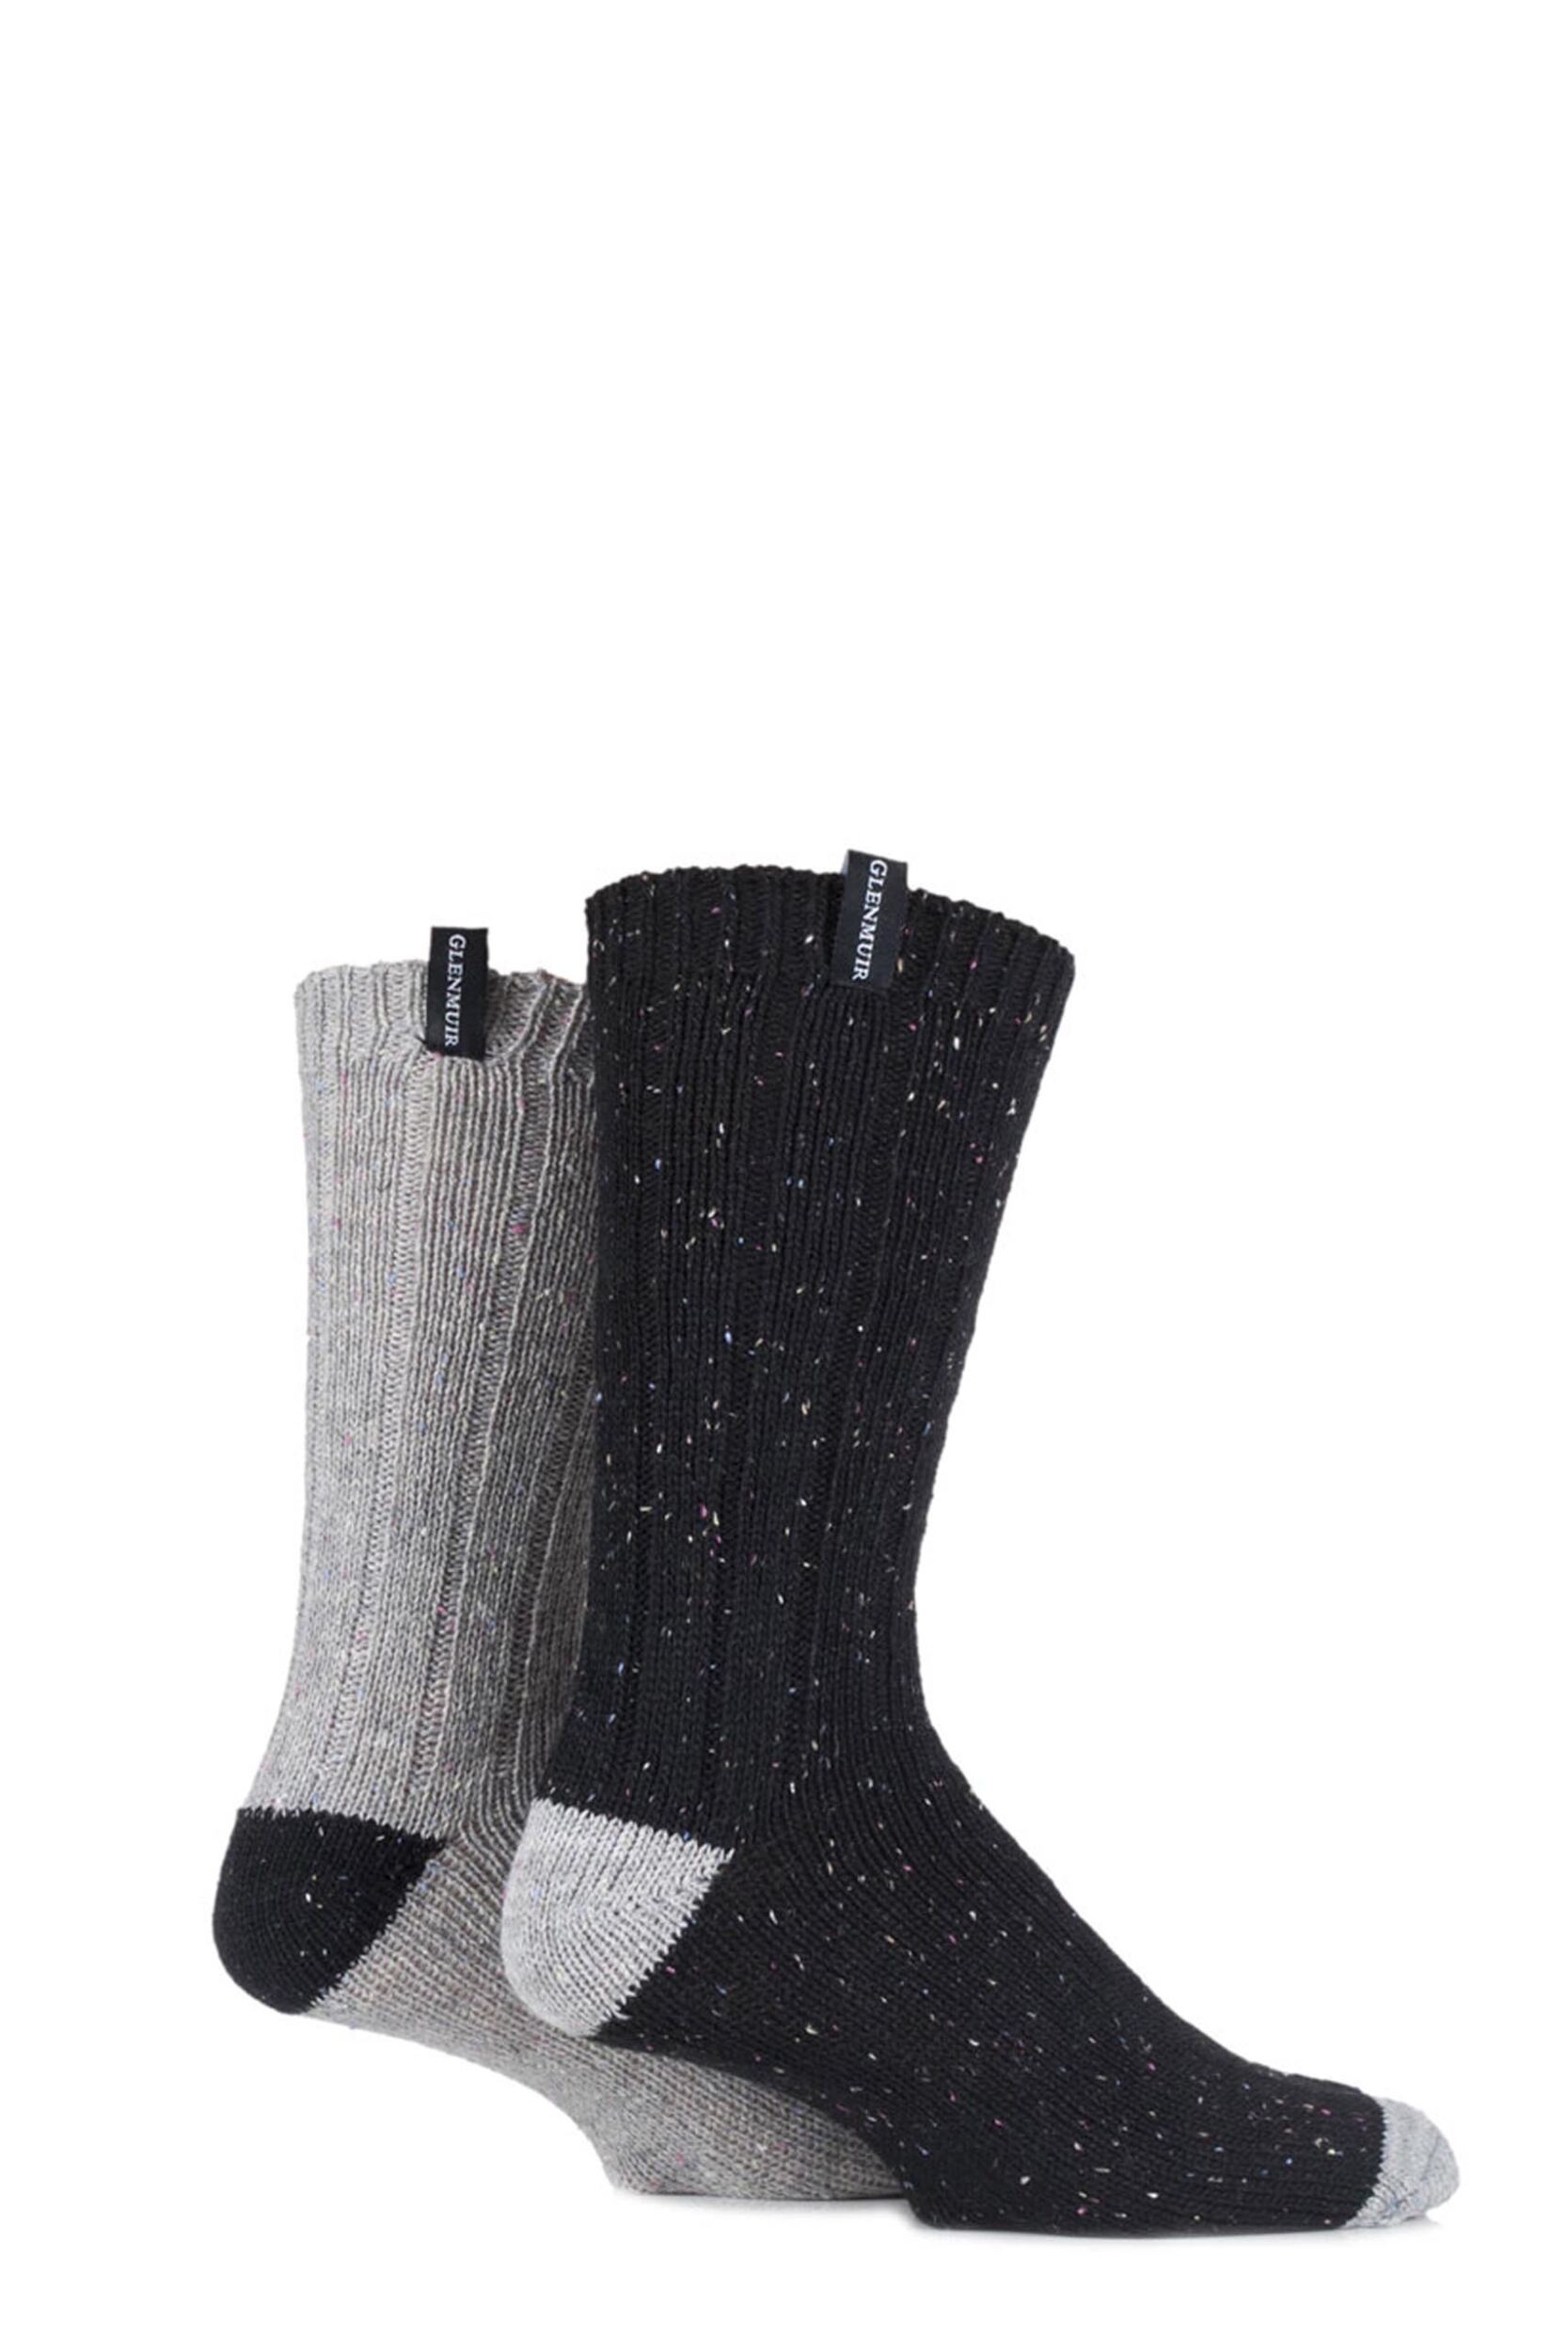 Mens 2 Pair Glenmuir Merino Wool Blend Ribbed Marl Boot Socks | eBay